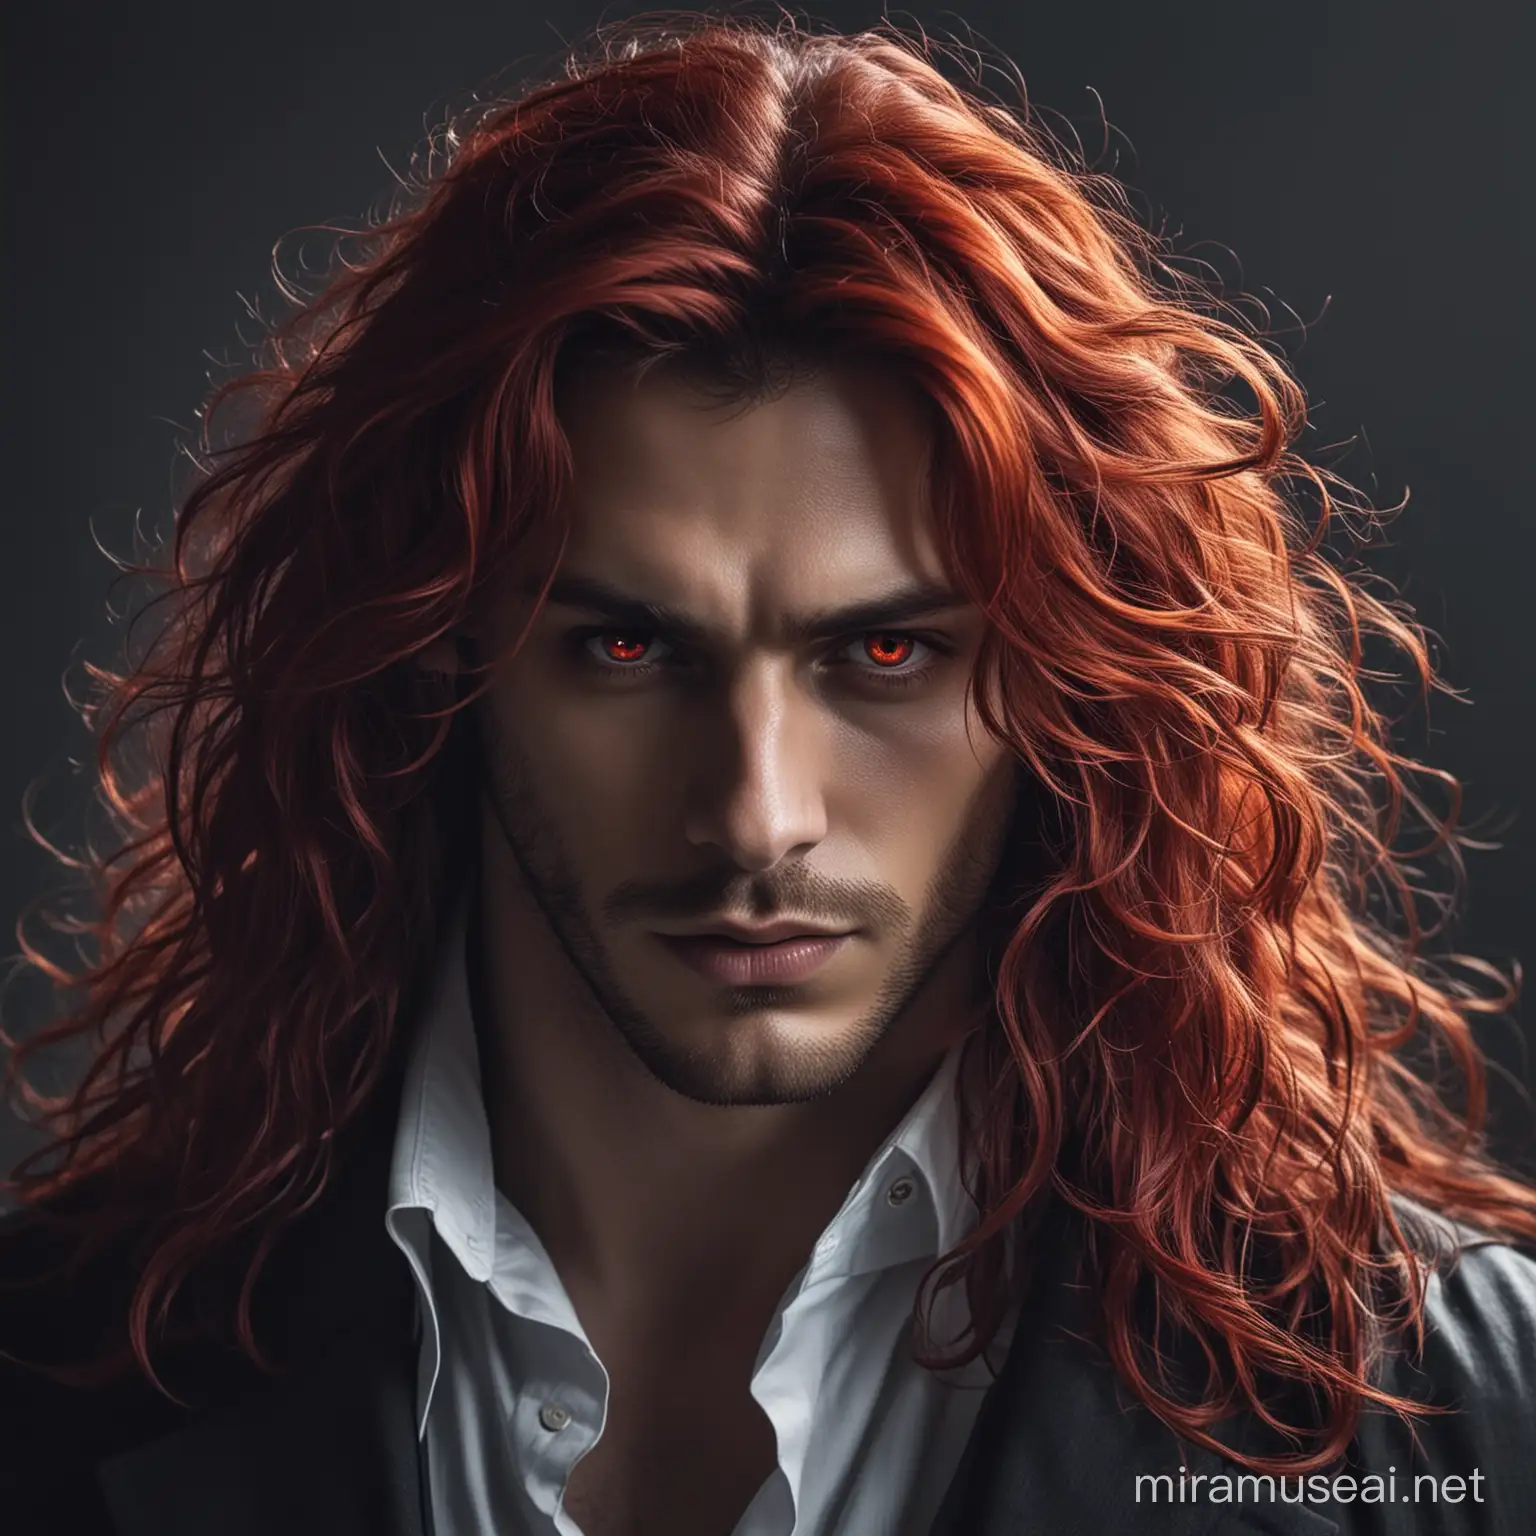 Demonic Stylish Man with Red Wavy Hair and Fiery Gaze